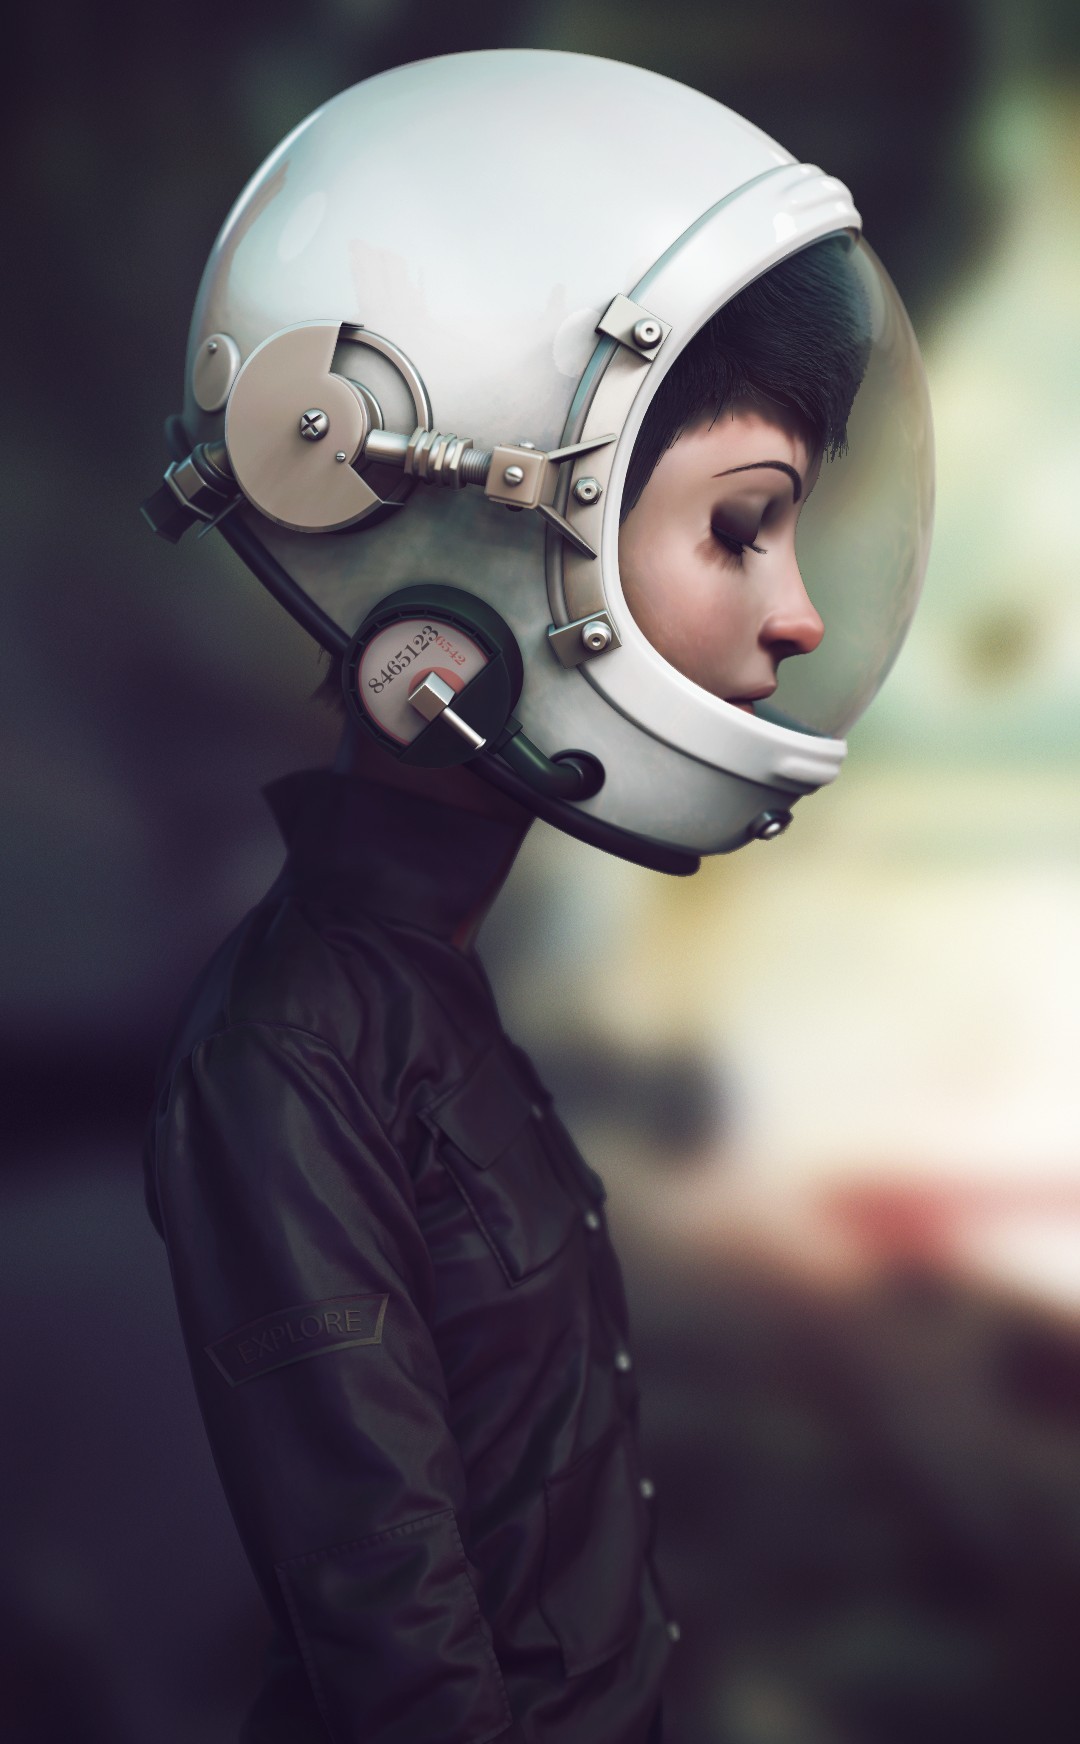 General 1080x1744 digital art women astronaut face helmet science fiction women science fiction profile